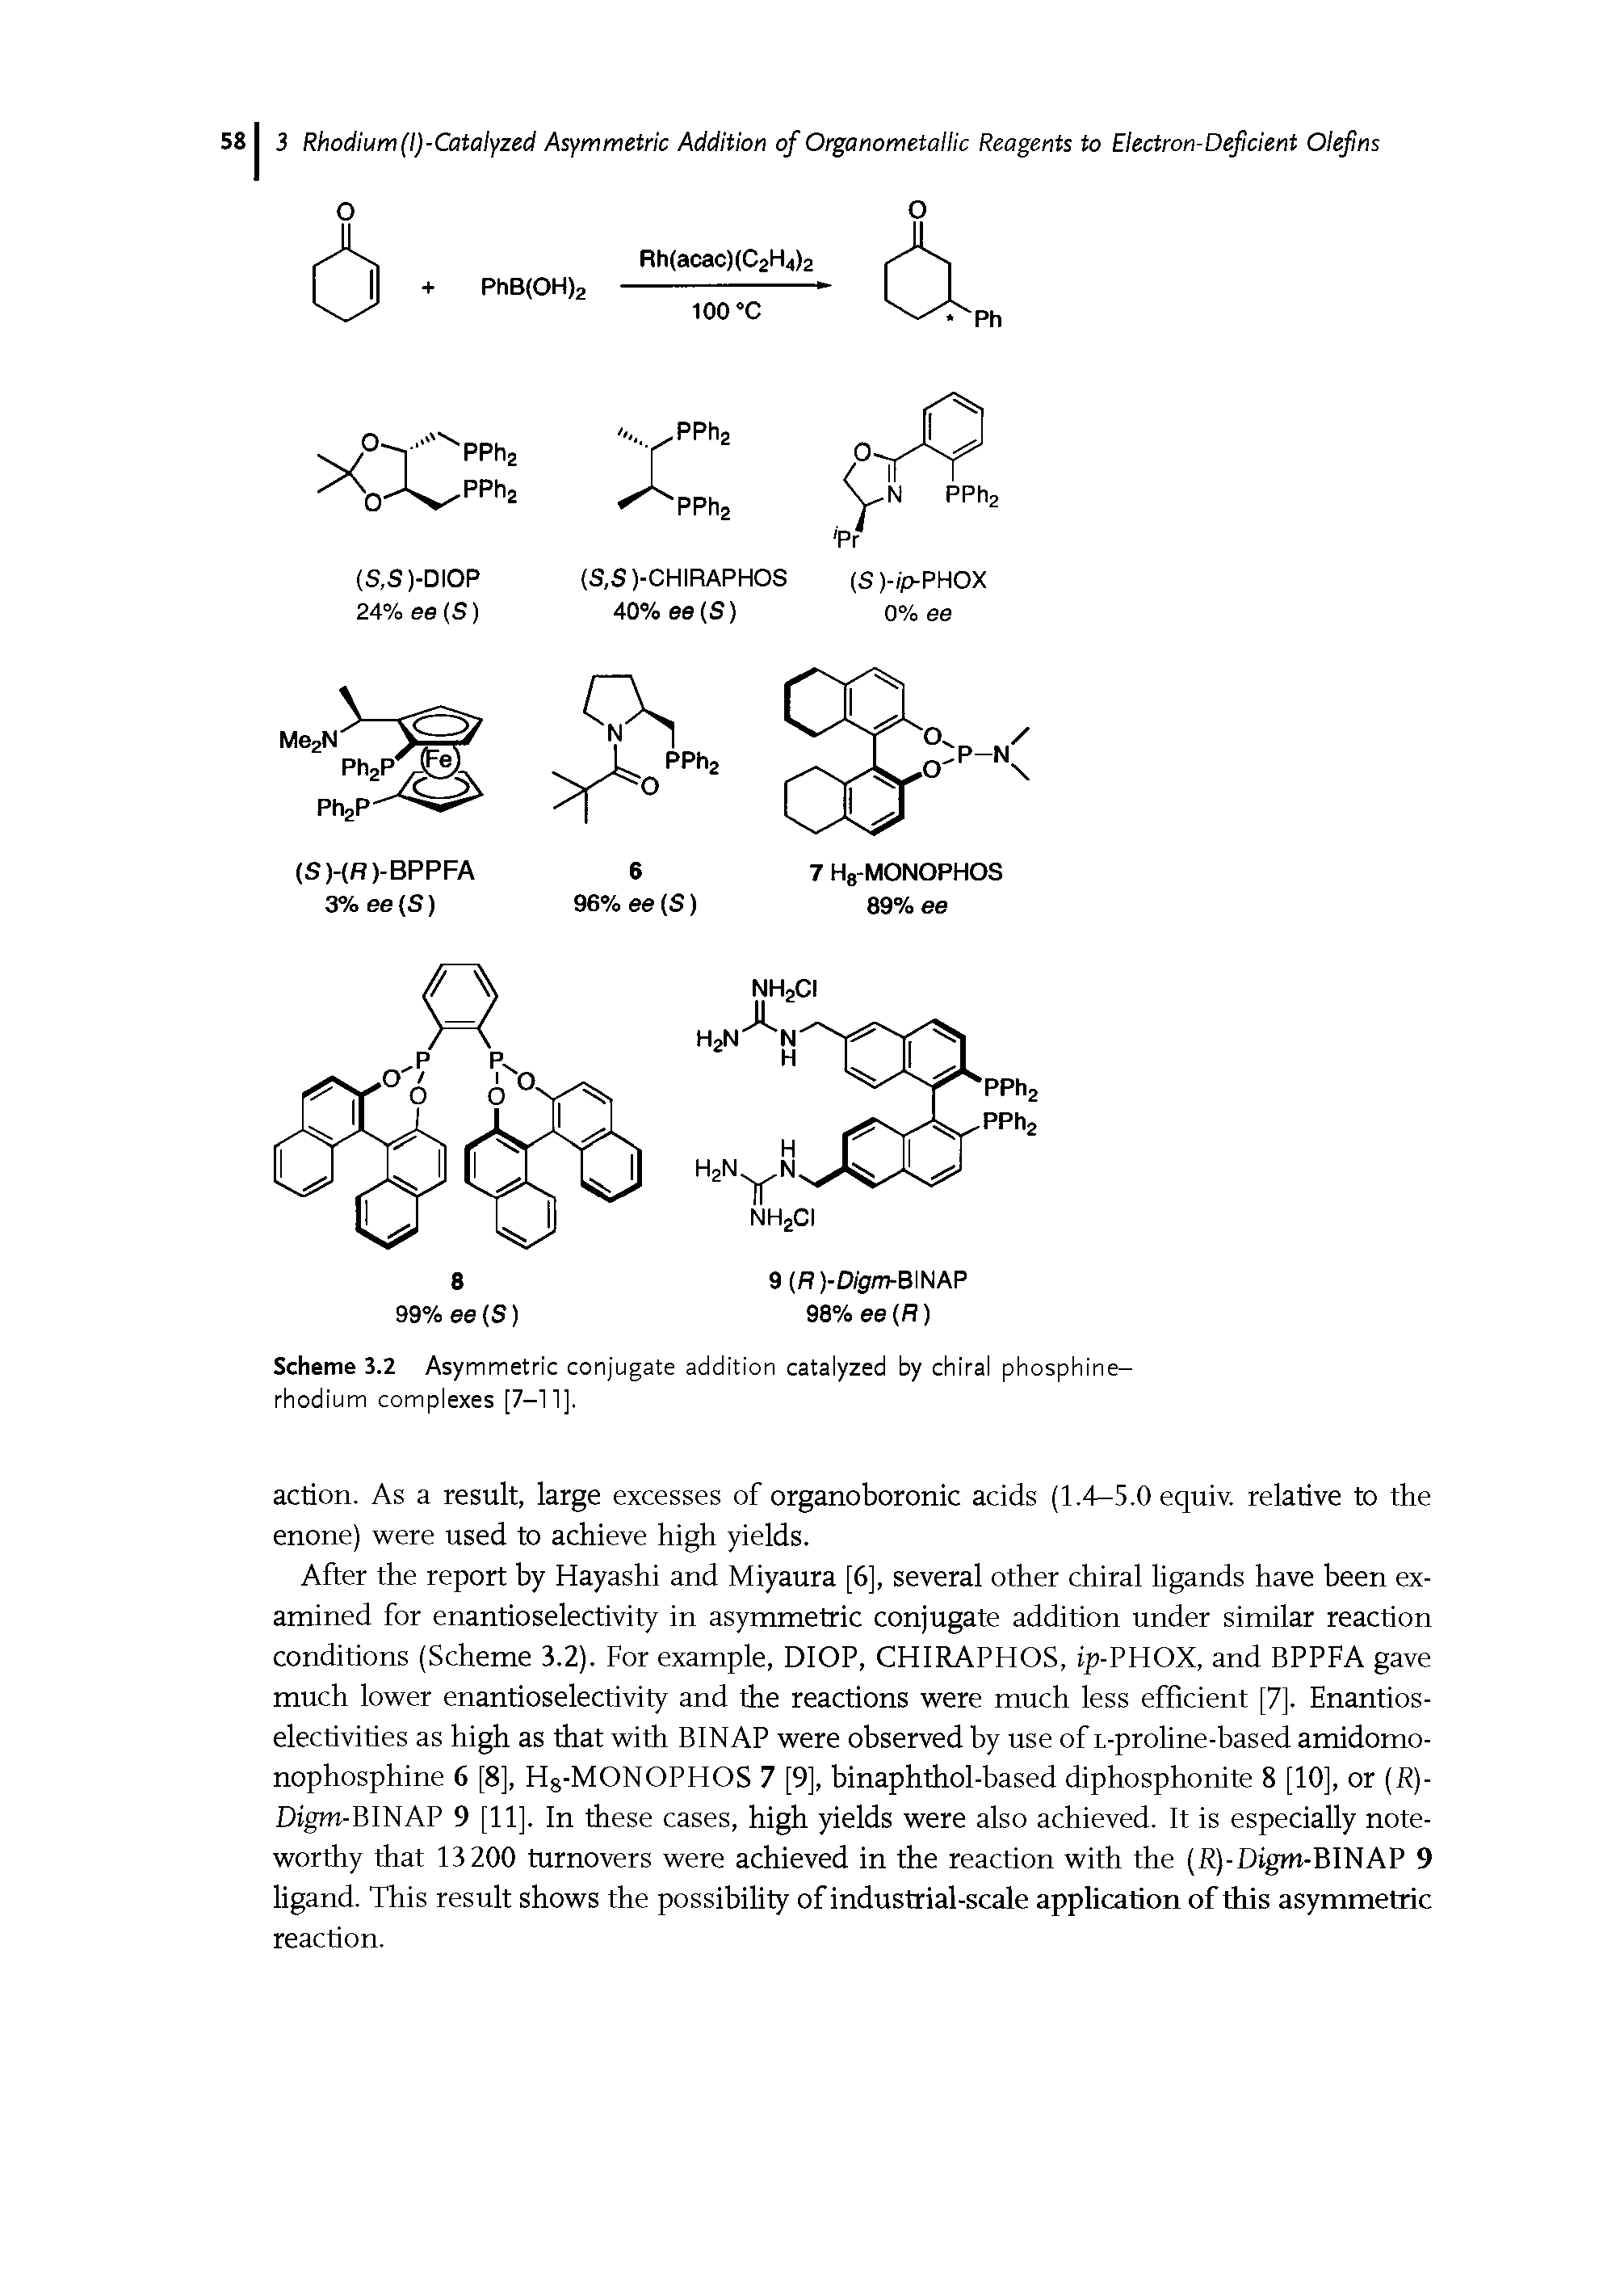 Scheme 3.2 Asymmetric conjugate addition catalyzed by chiral phosphine-rhodium complexes [7-11].